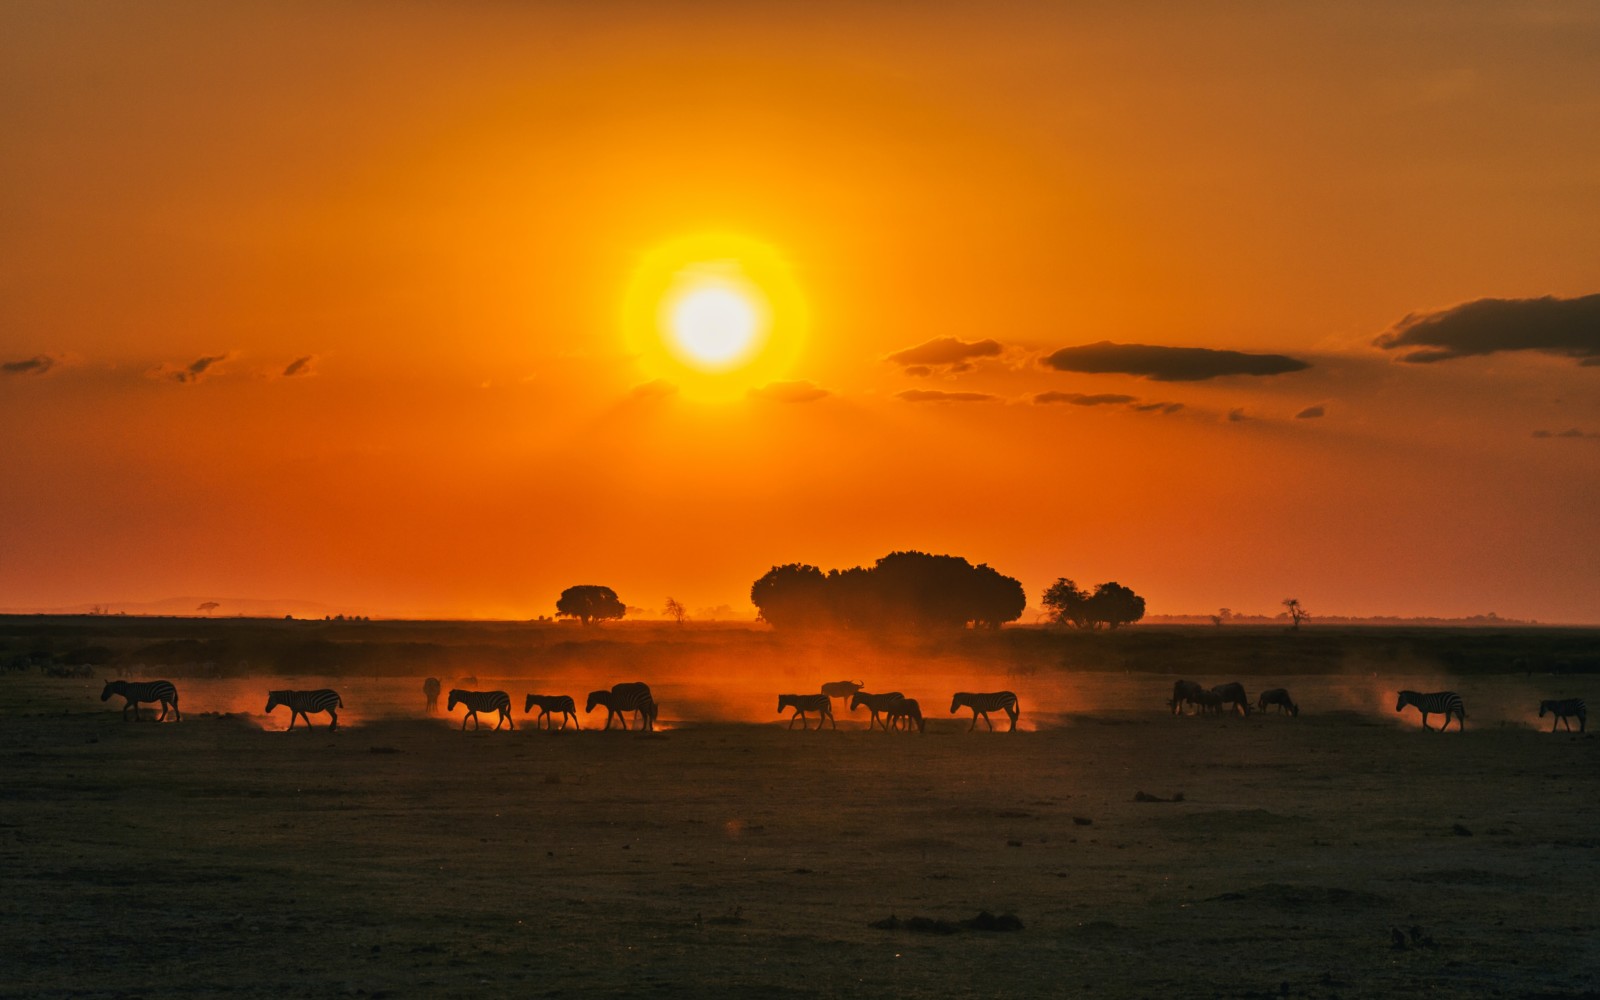 View of wildlife roaming under a golden sunset and orange sky in Kenya